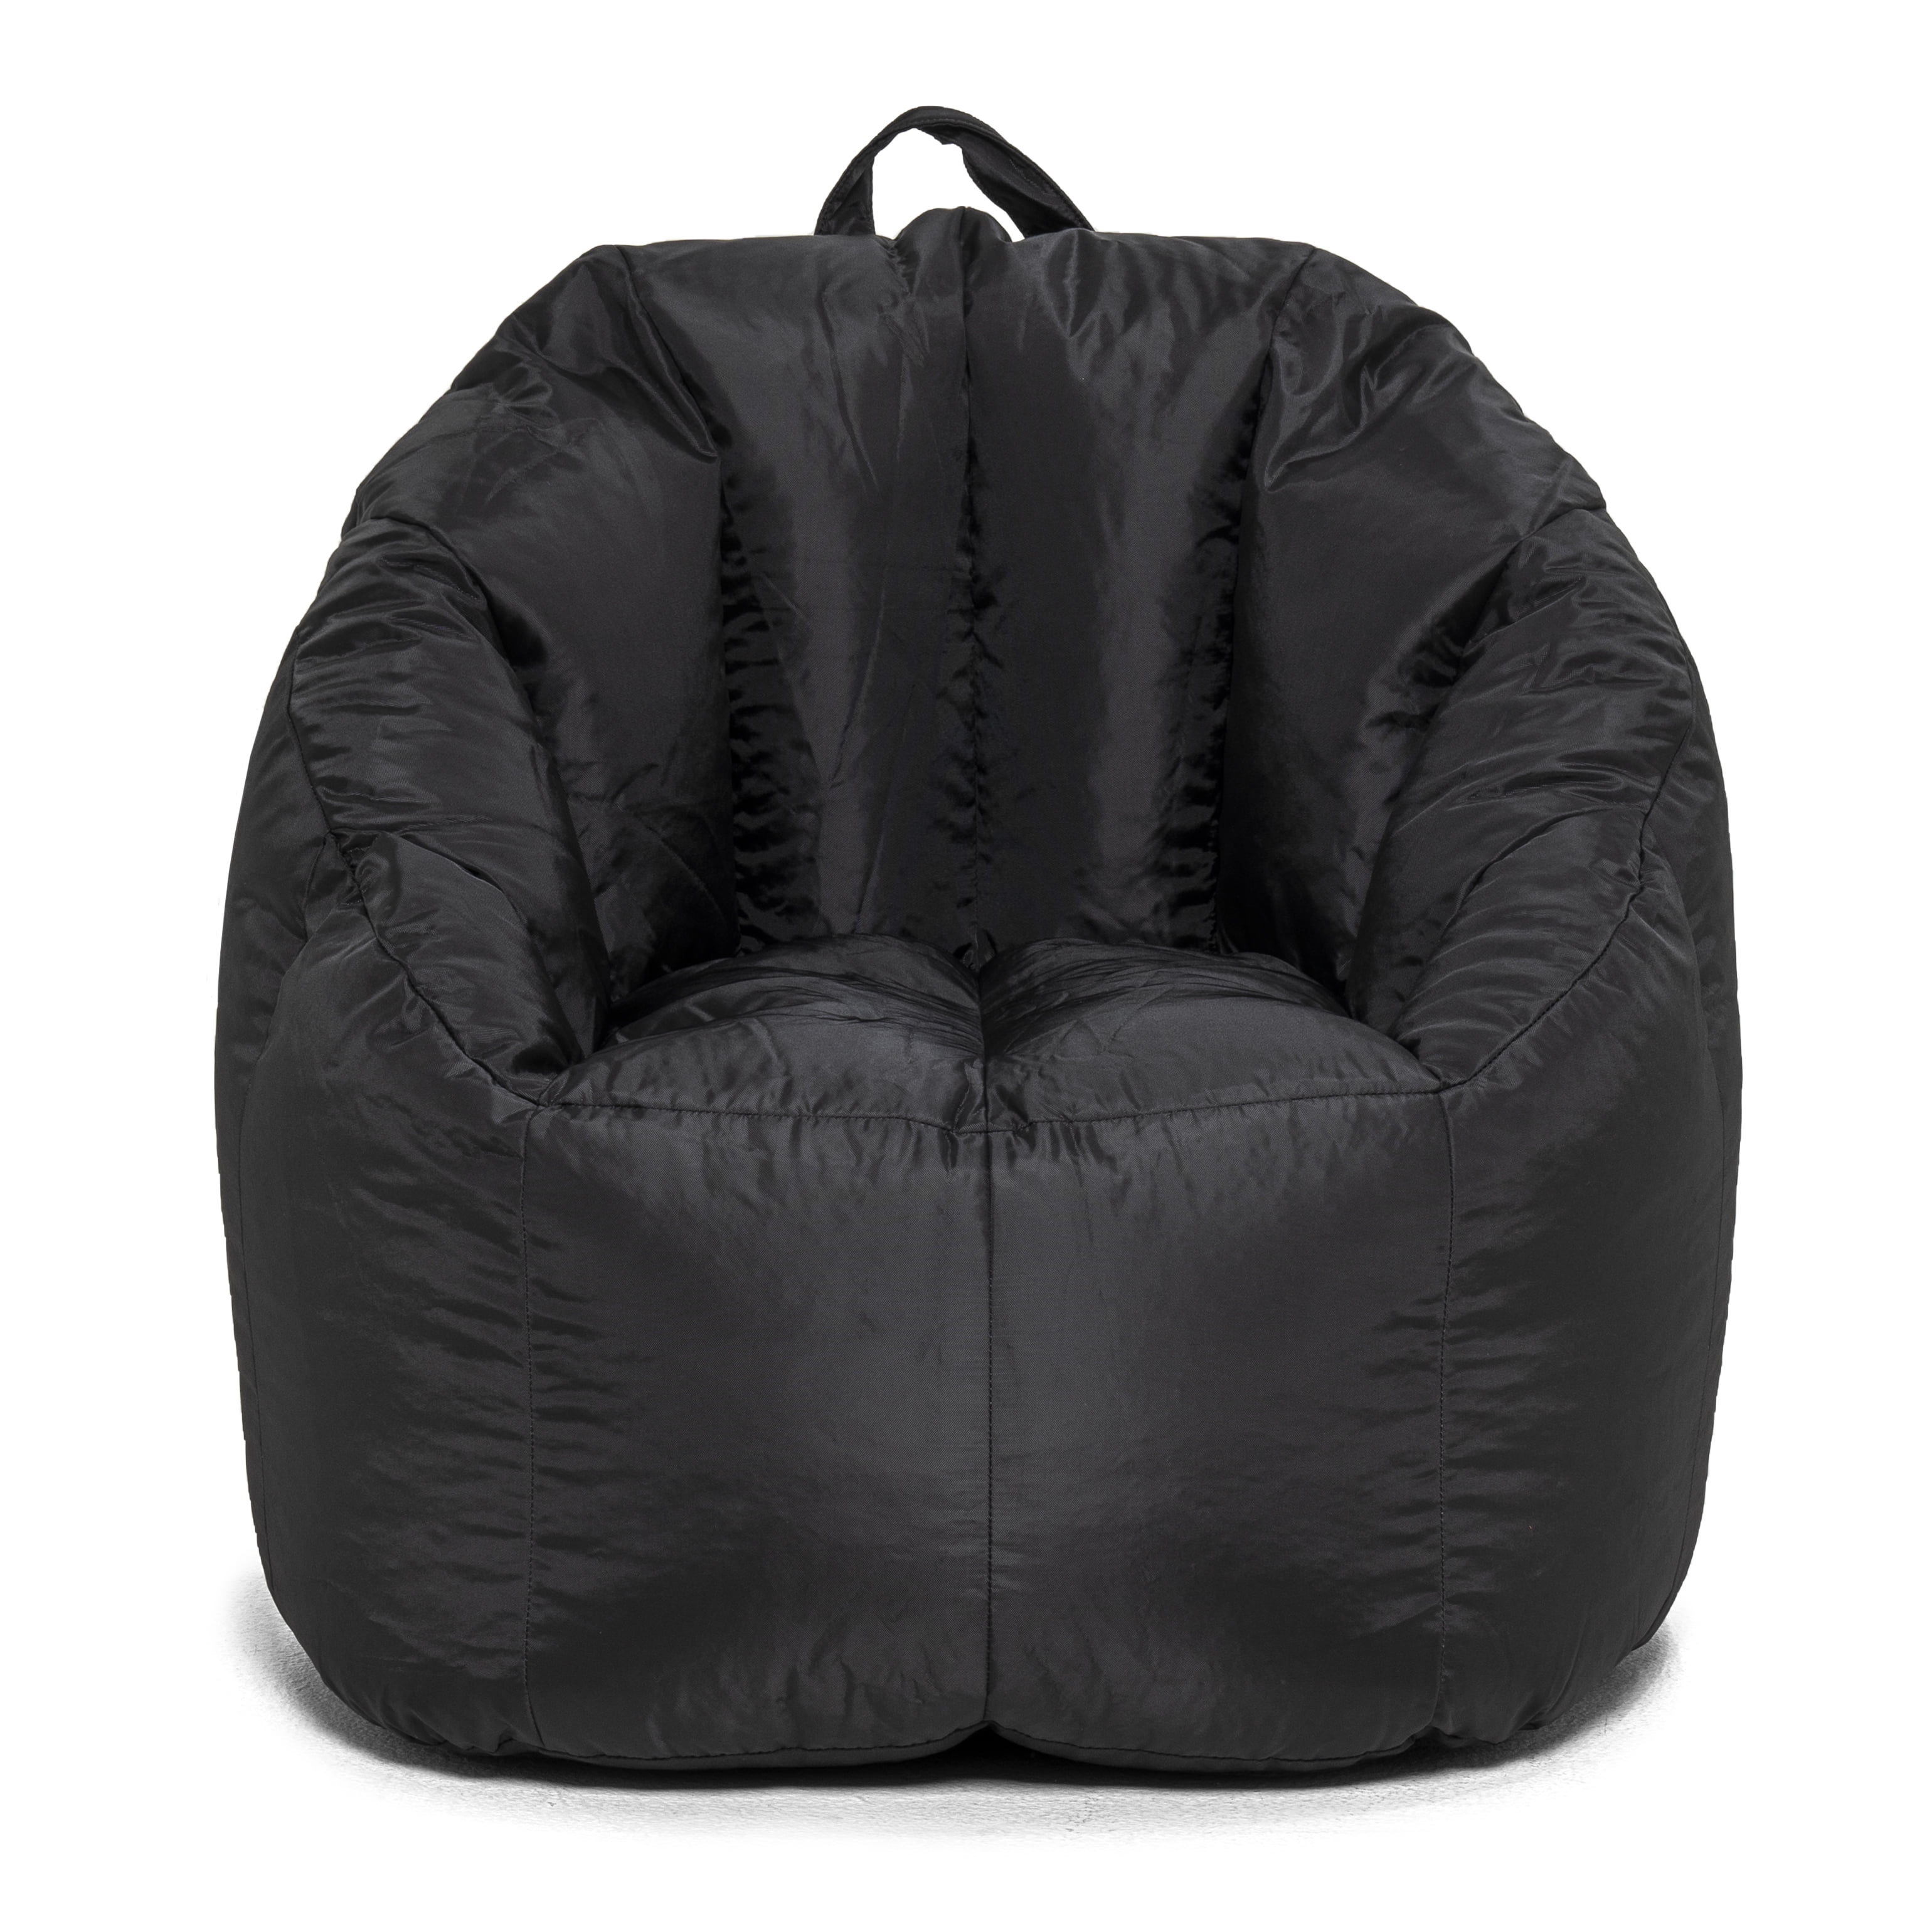 Big Joe Joey Bean Bag Chair, Black SmartMax Fabric